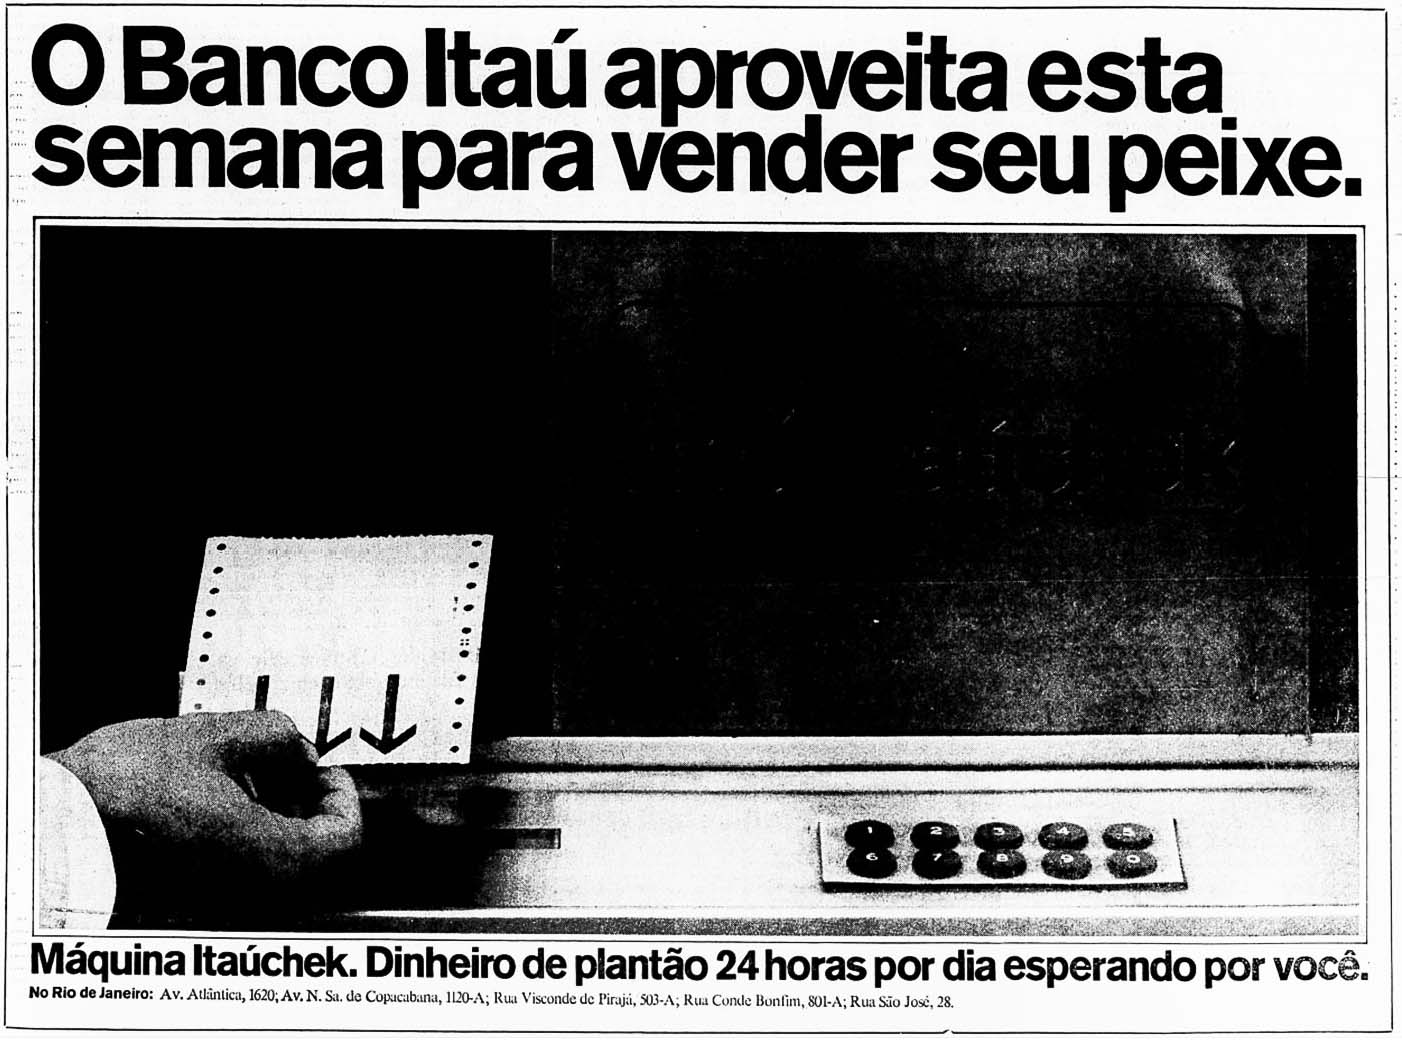 DPZ para Itaú / Itauchek - O Banco Itaú aproveita a Semana Santa para vender seu peixe"